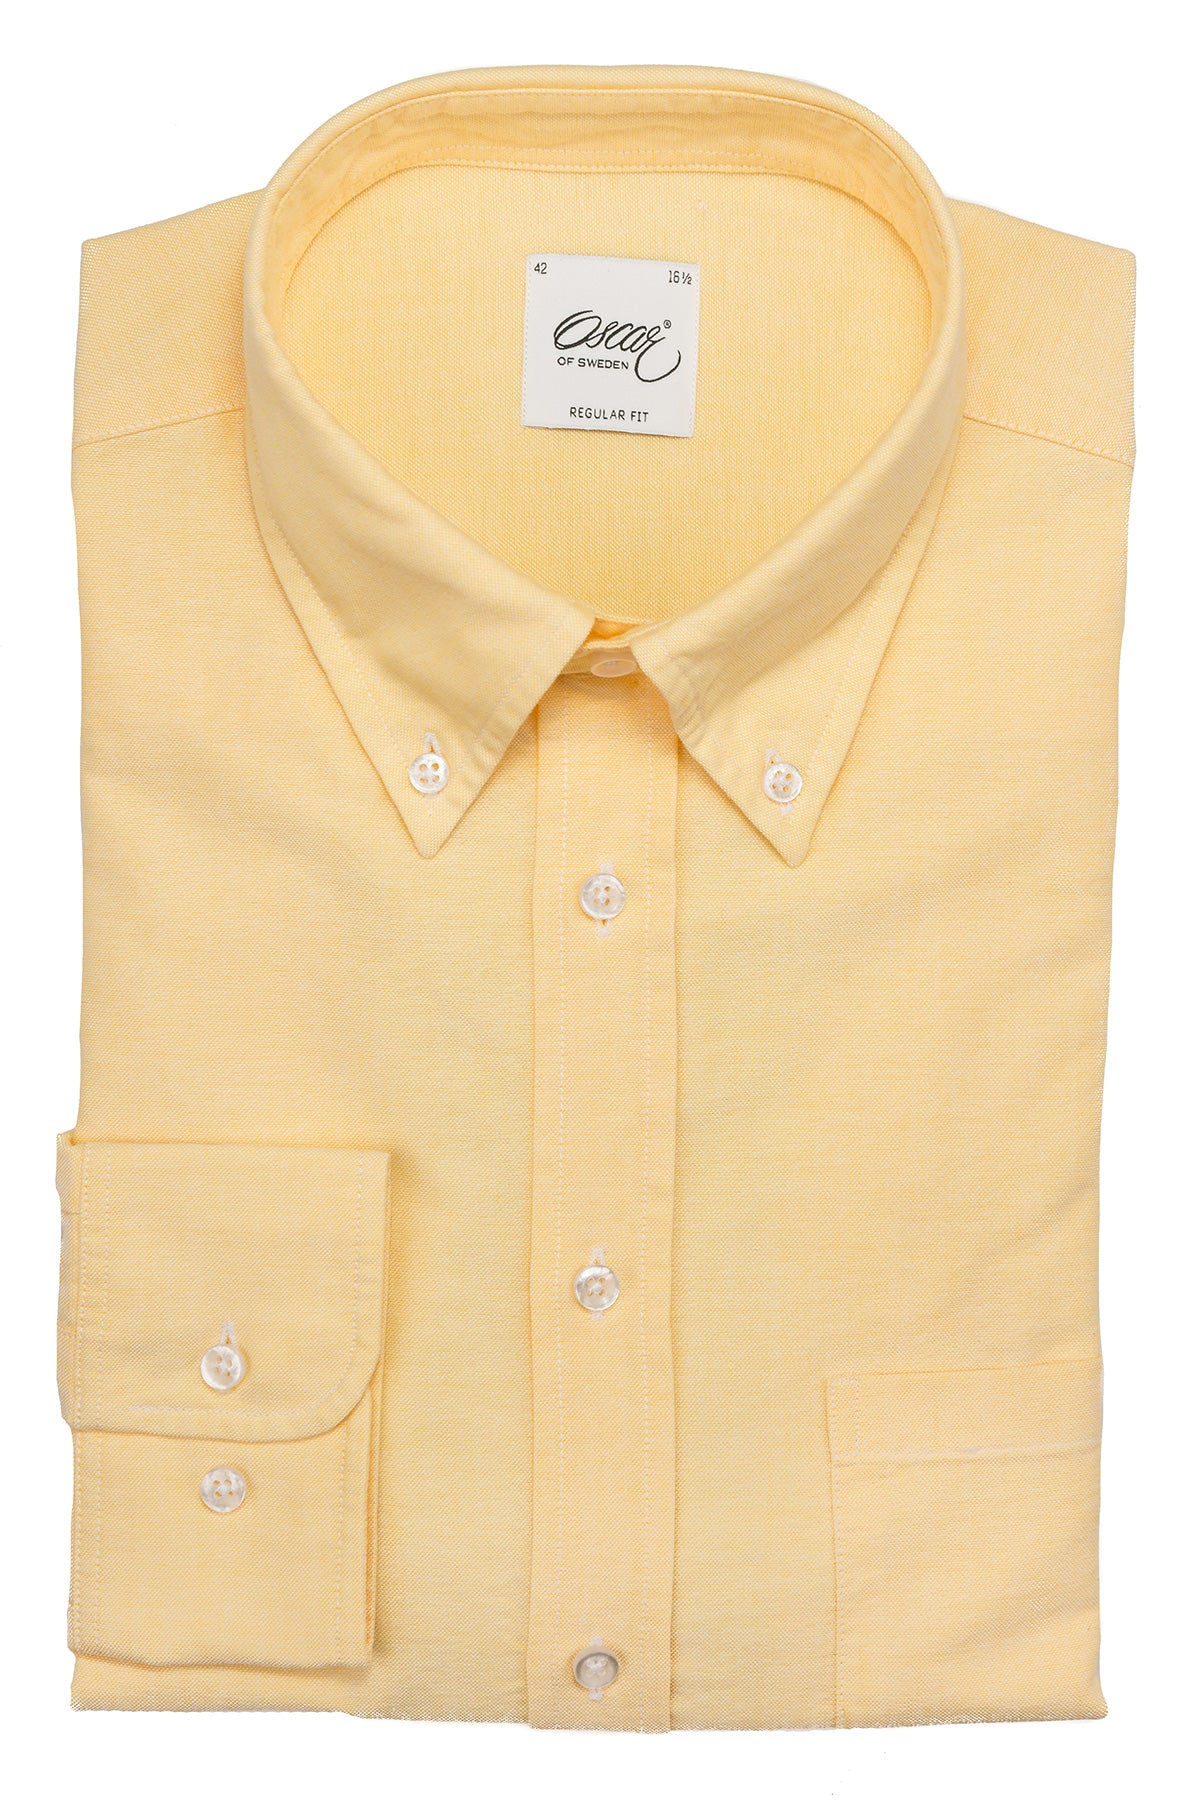 Yellow button down oxford regular fit shirt